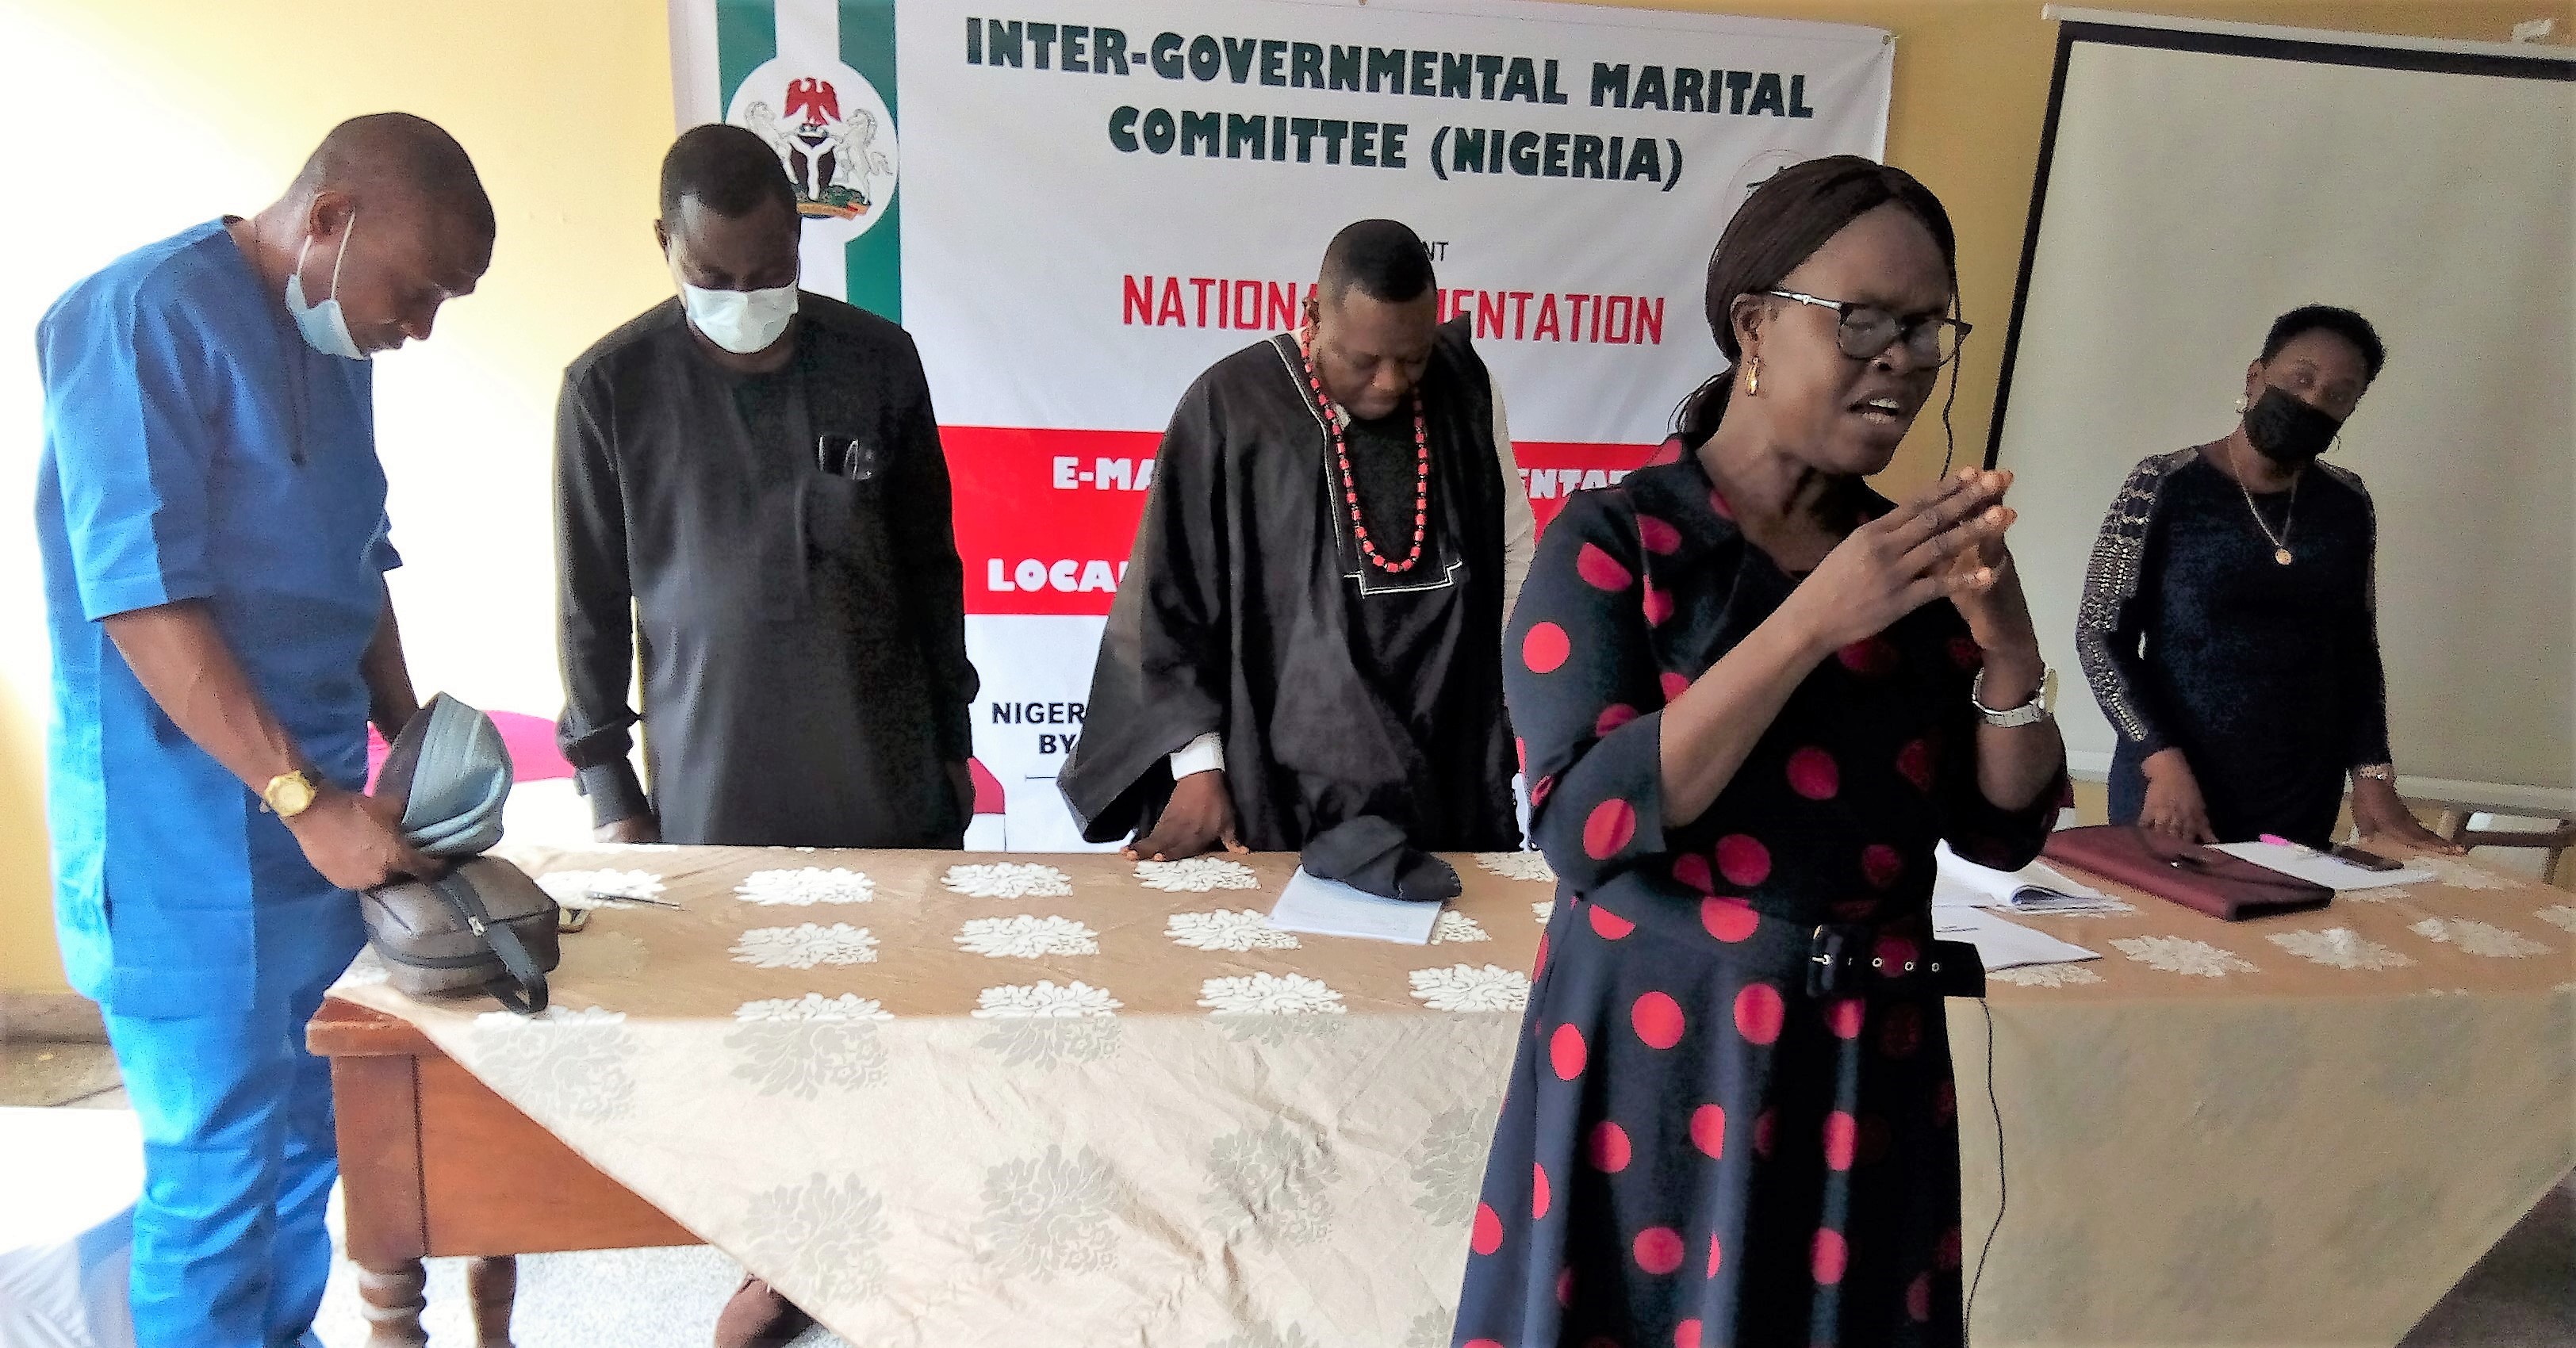 The State Principal Monitoring Supervisor (SPMS); Rev. (Mrs) Patricia Igbon leading the opening prayers